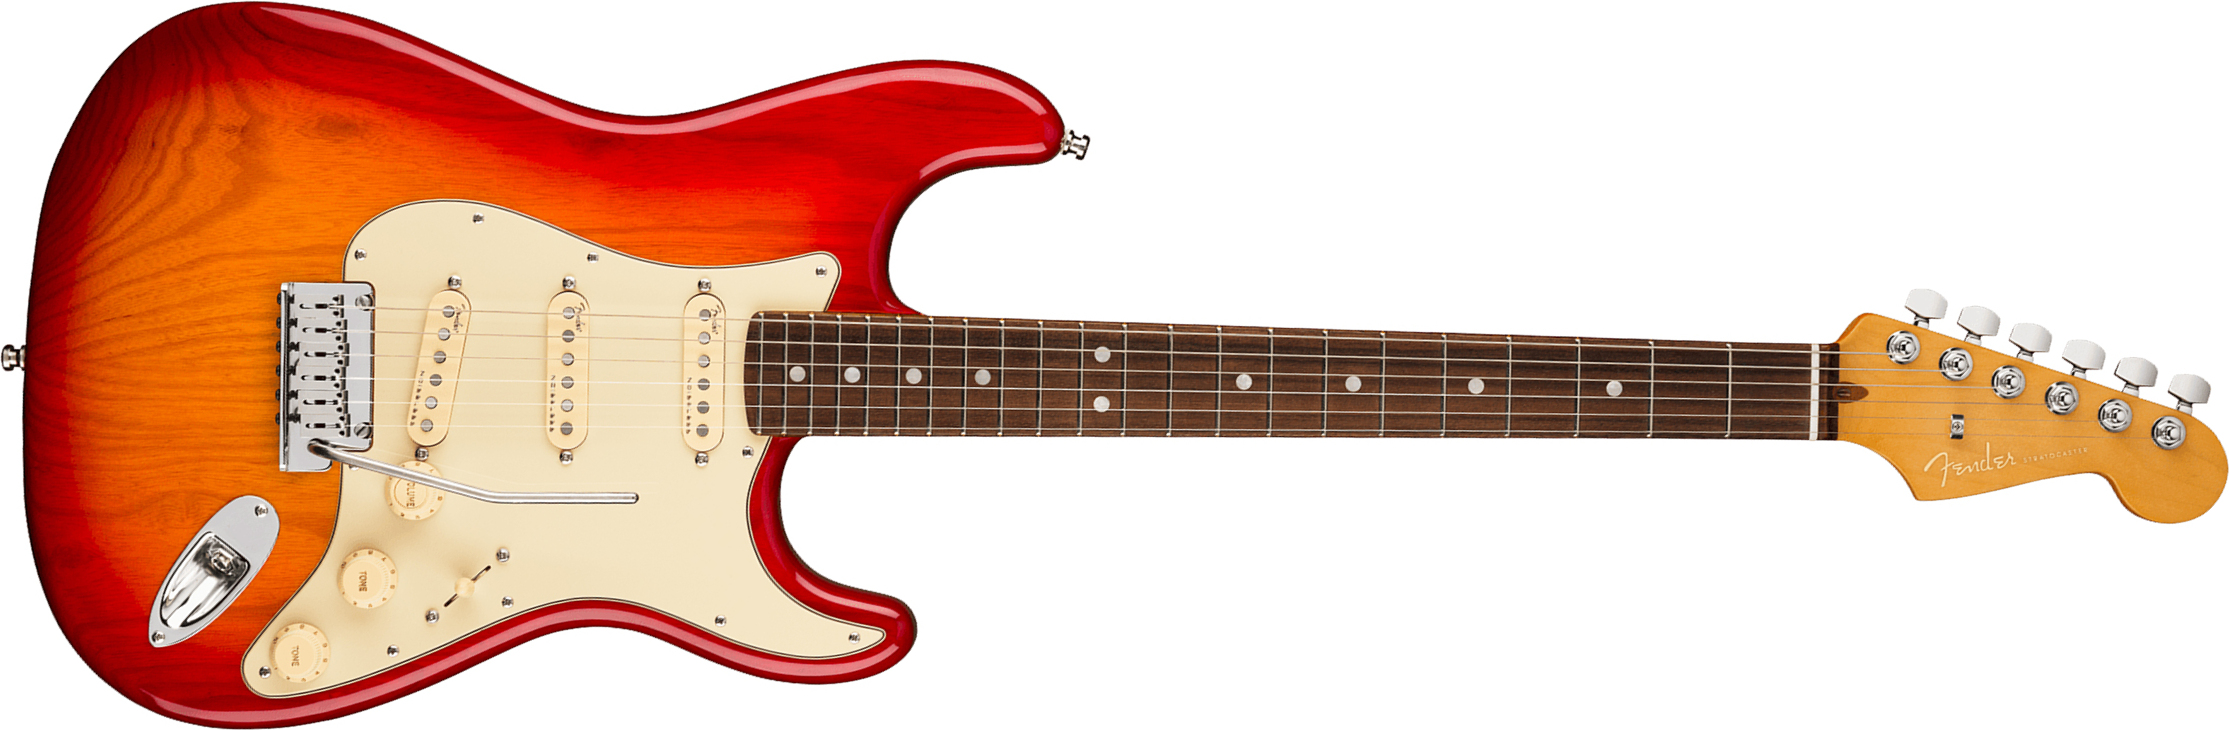 Fender Strat American Ultra 2019 Usa Rw - Plasma Red Burst - Guitare Électrique Forme Str - Main picture